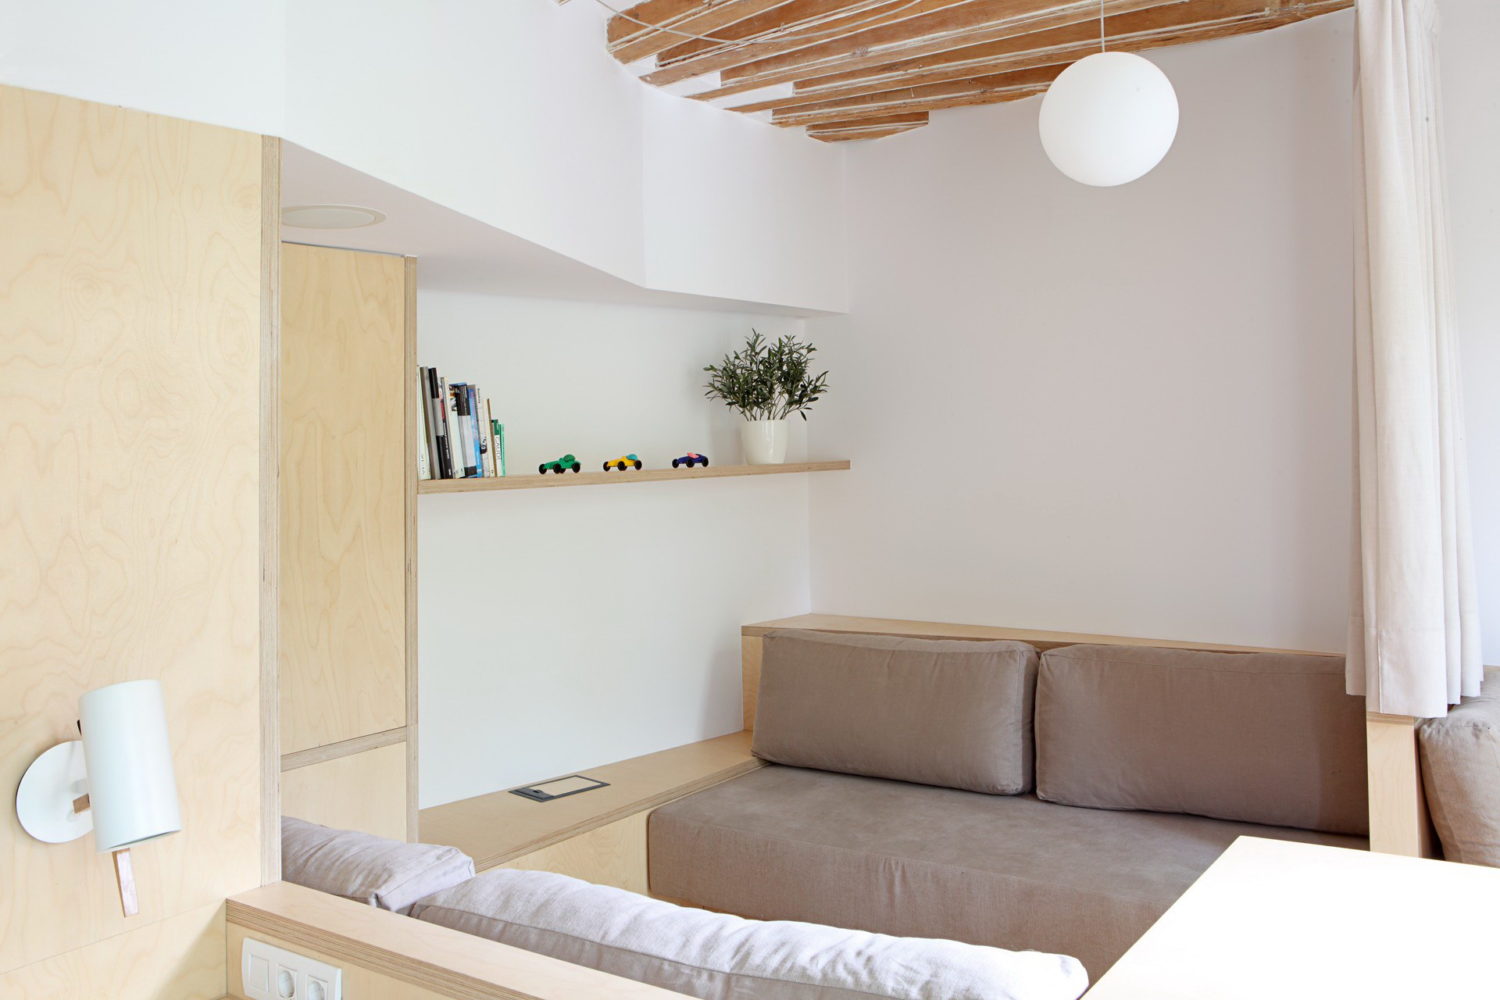 Piso Pujades11 | Small Apartment in Barcelona